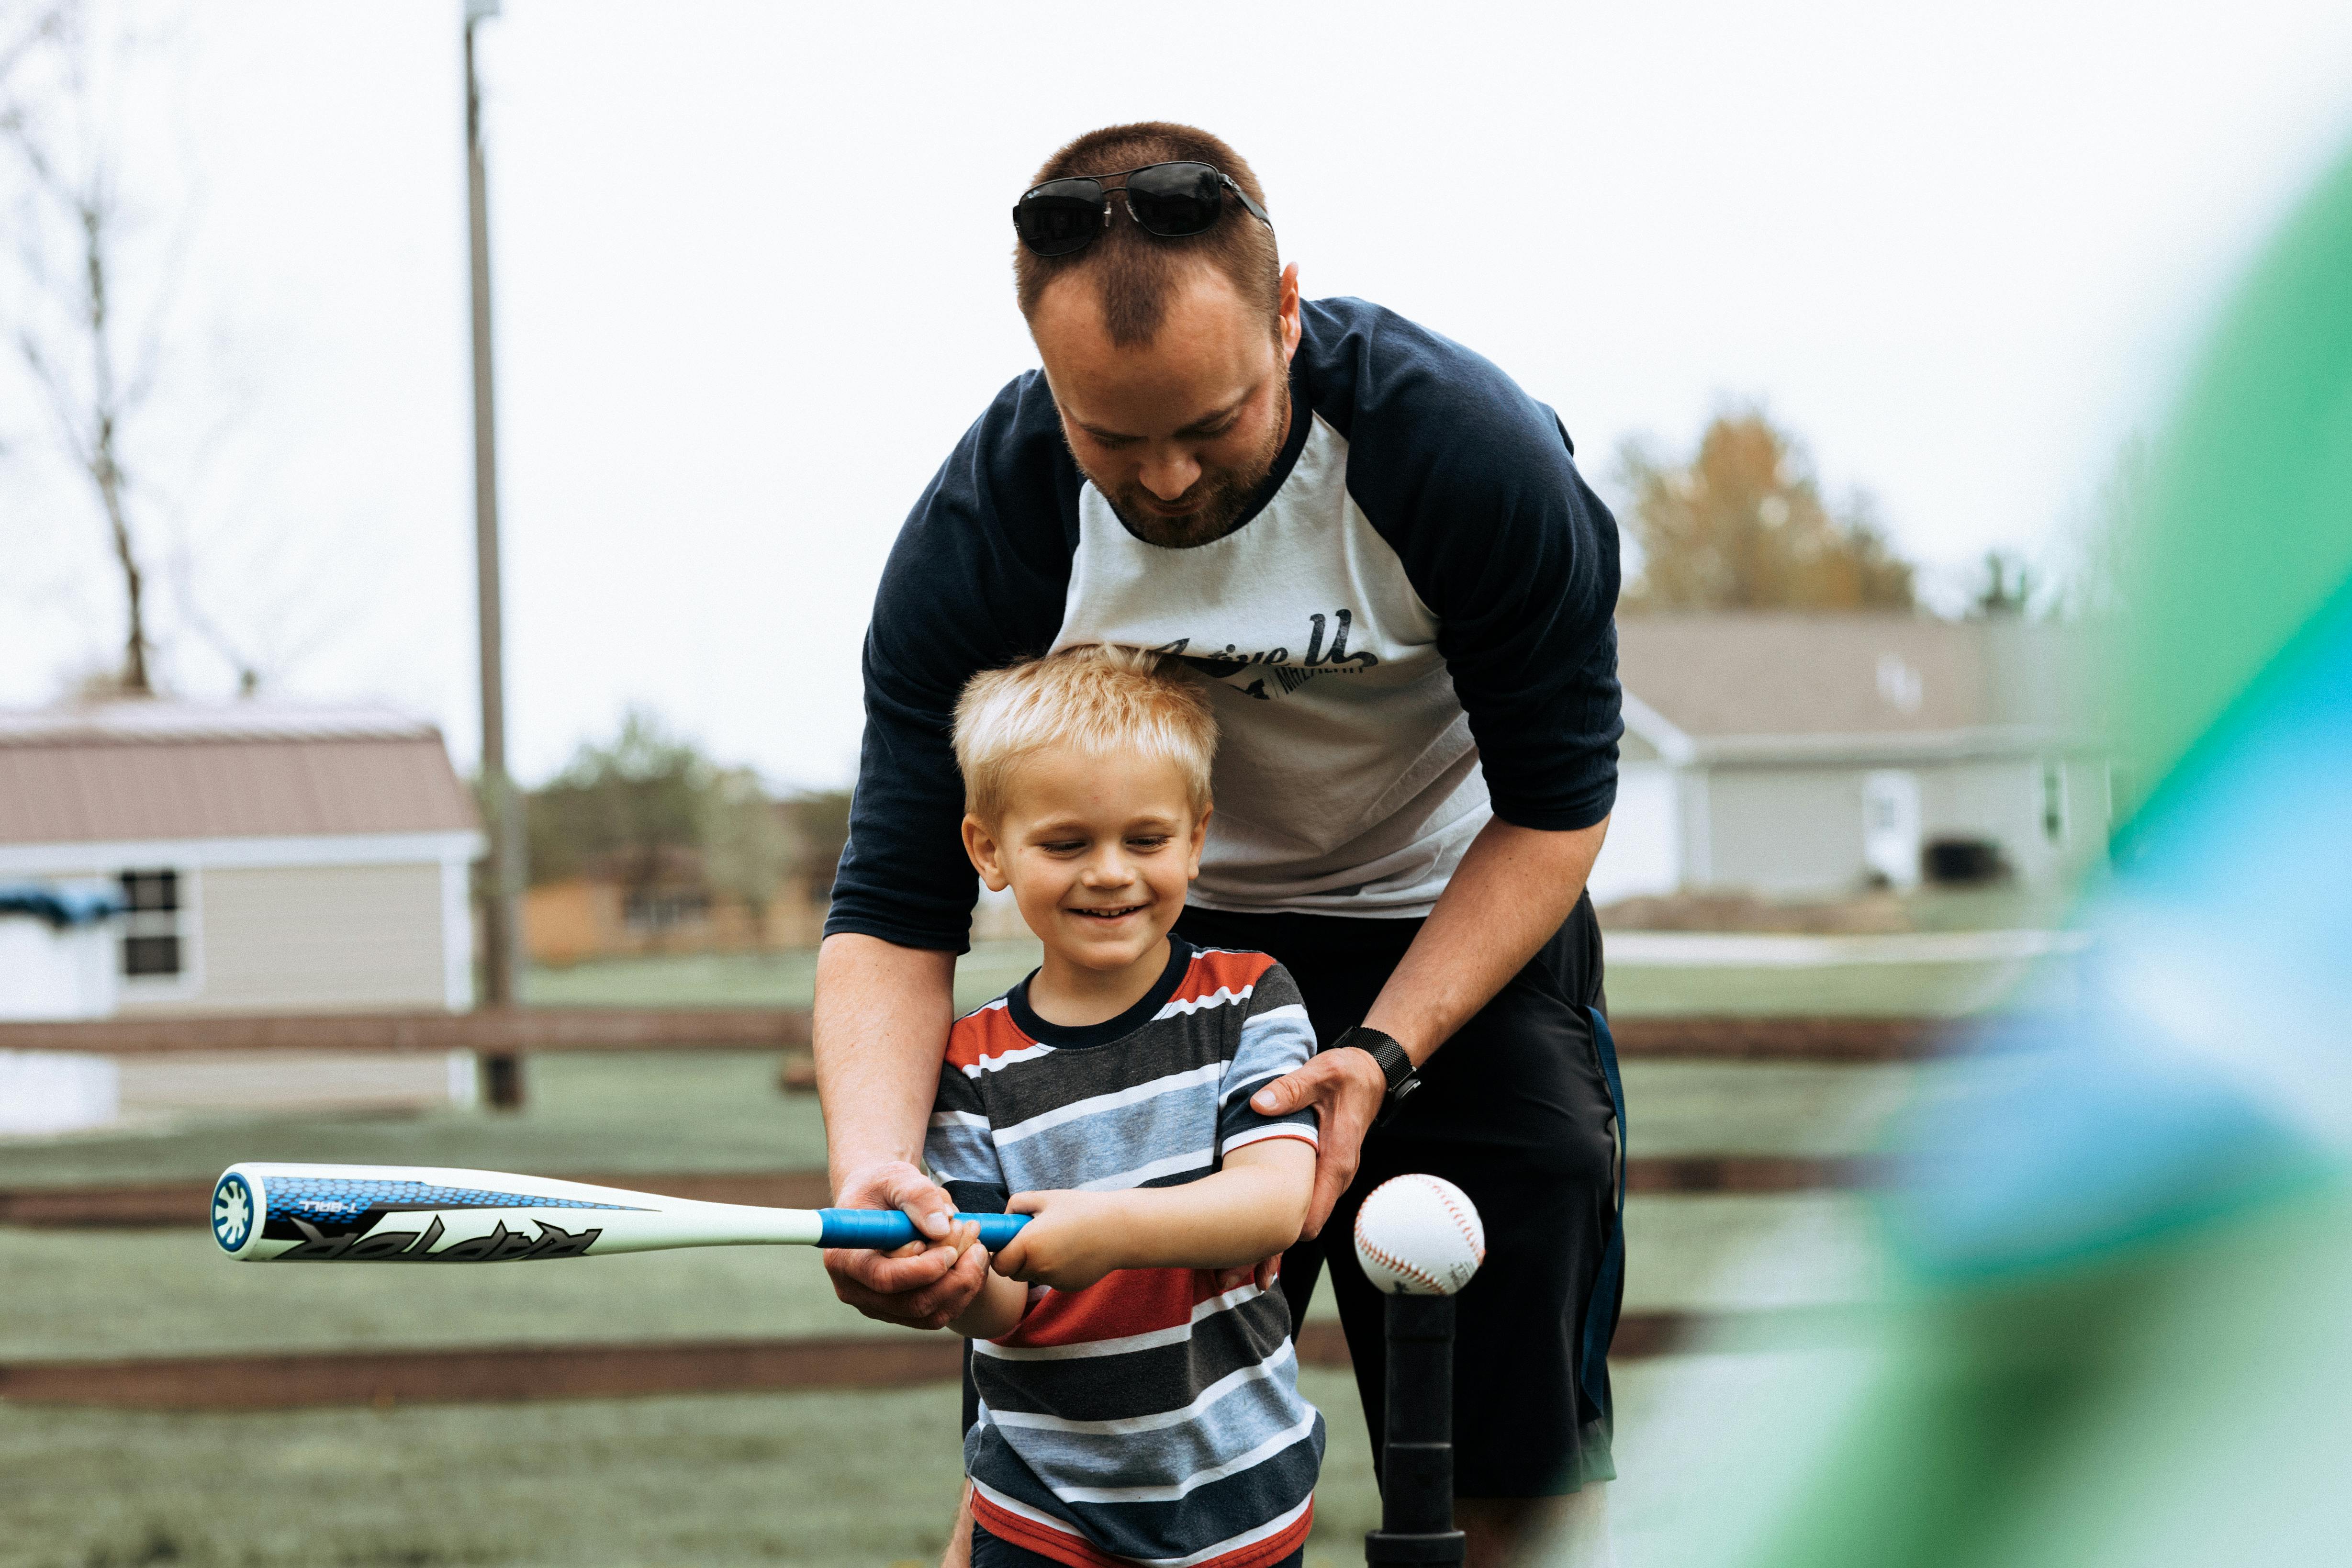 Dad Teaching Son to Play Baseball · Free Stock Photo